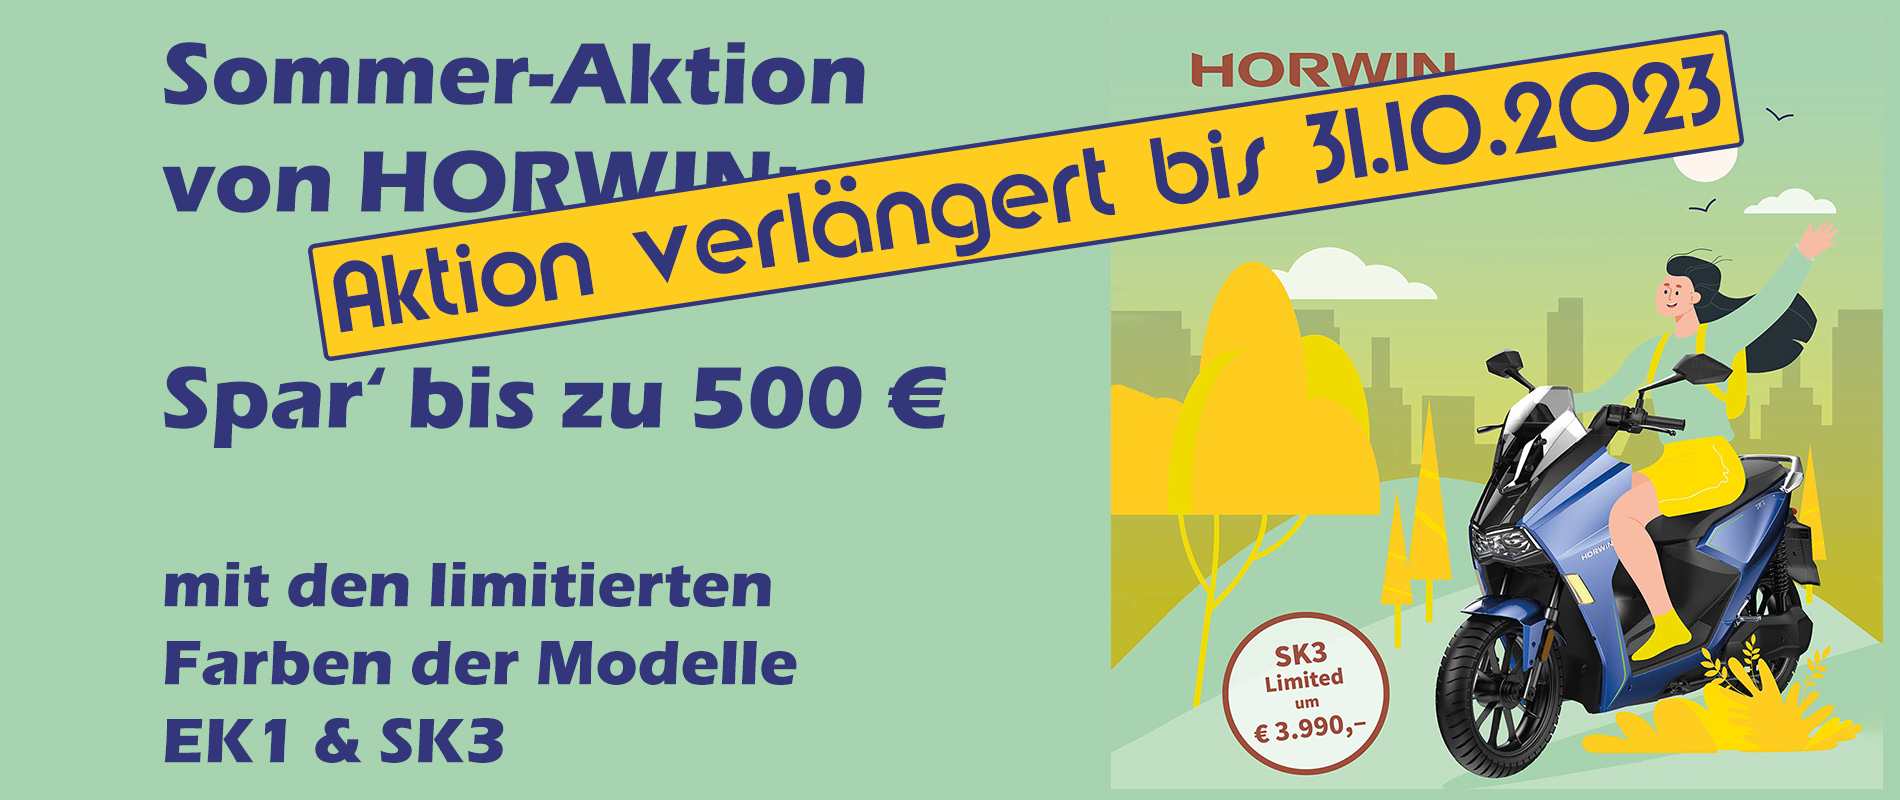 Horwin Limited Edition Sonderaktion verlängert